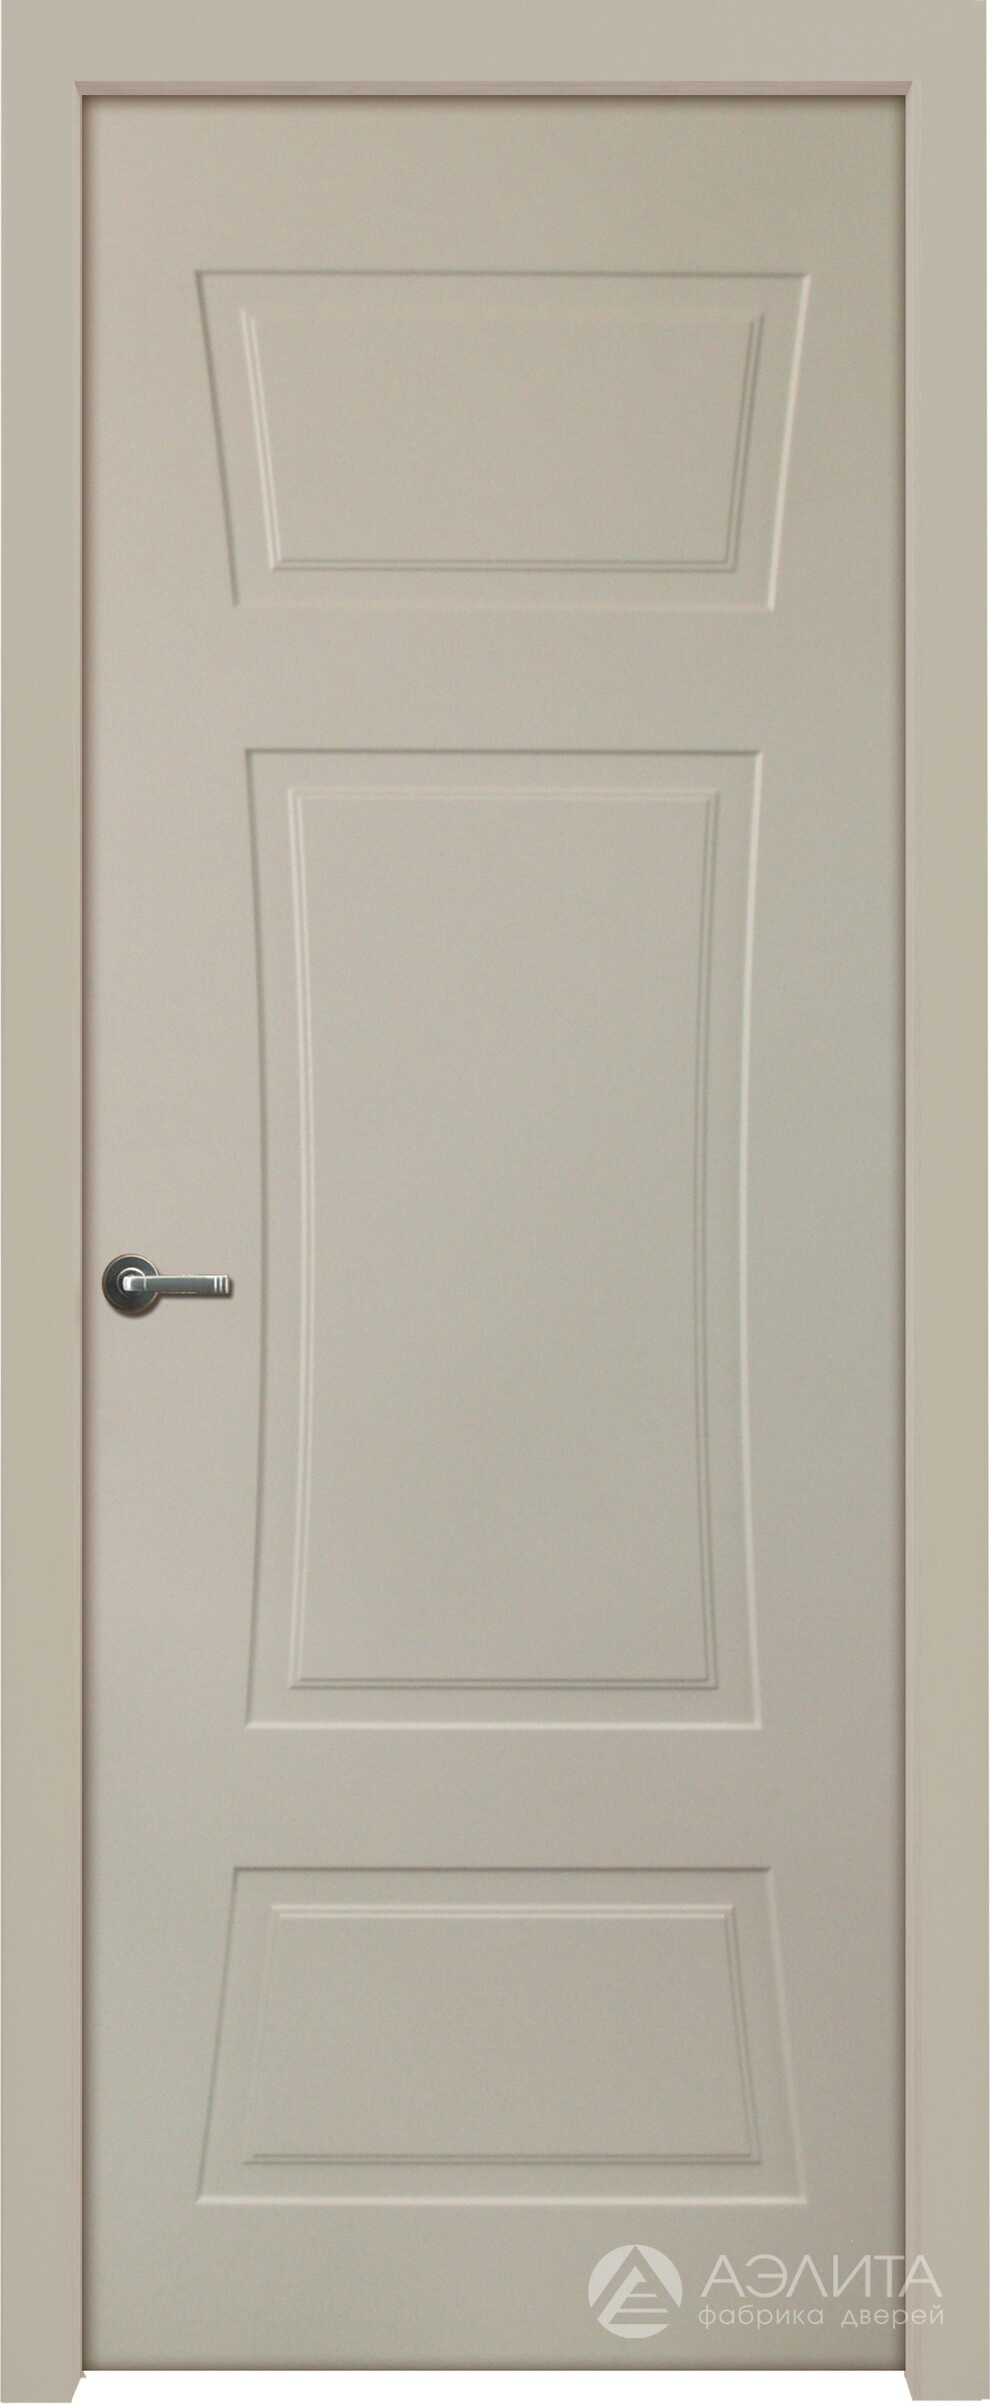 Аэлита Межкомнатная дверь Твин 145 ДГ, арт. 22187 - фото №1